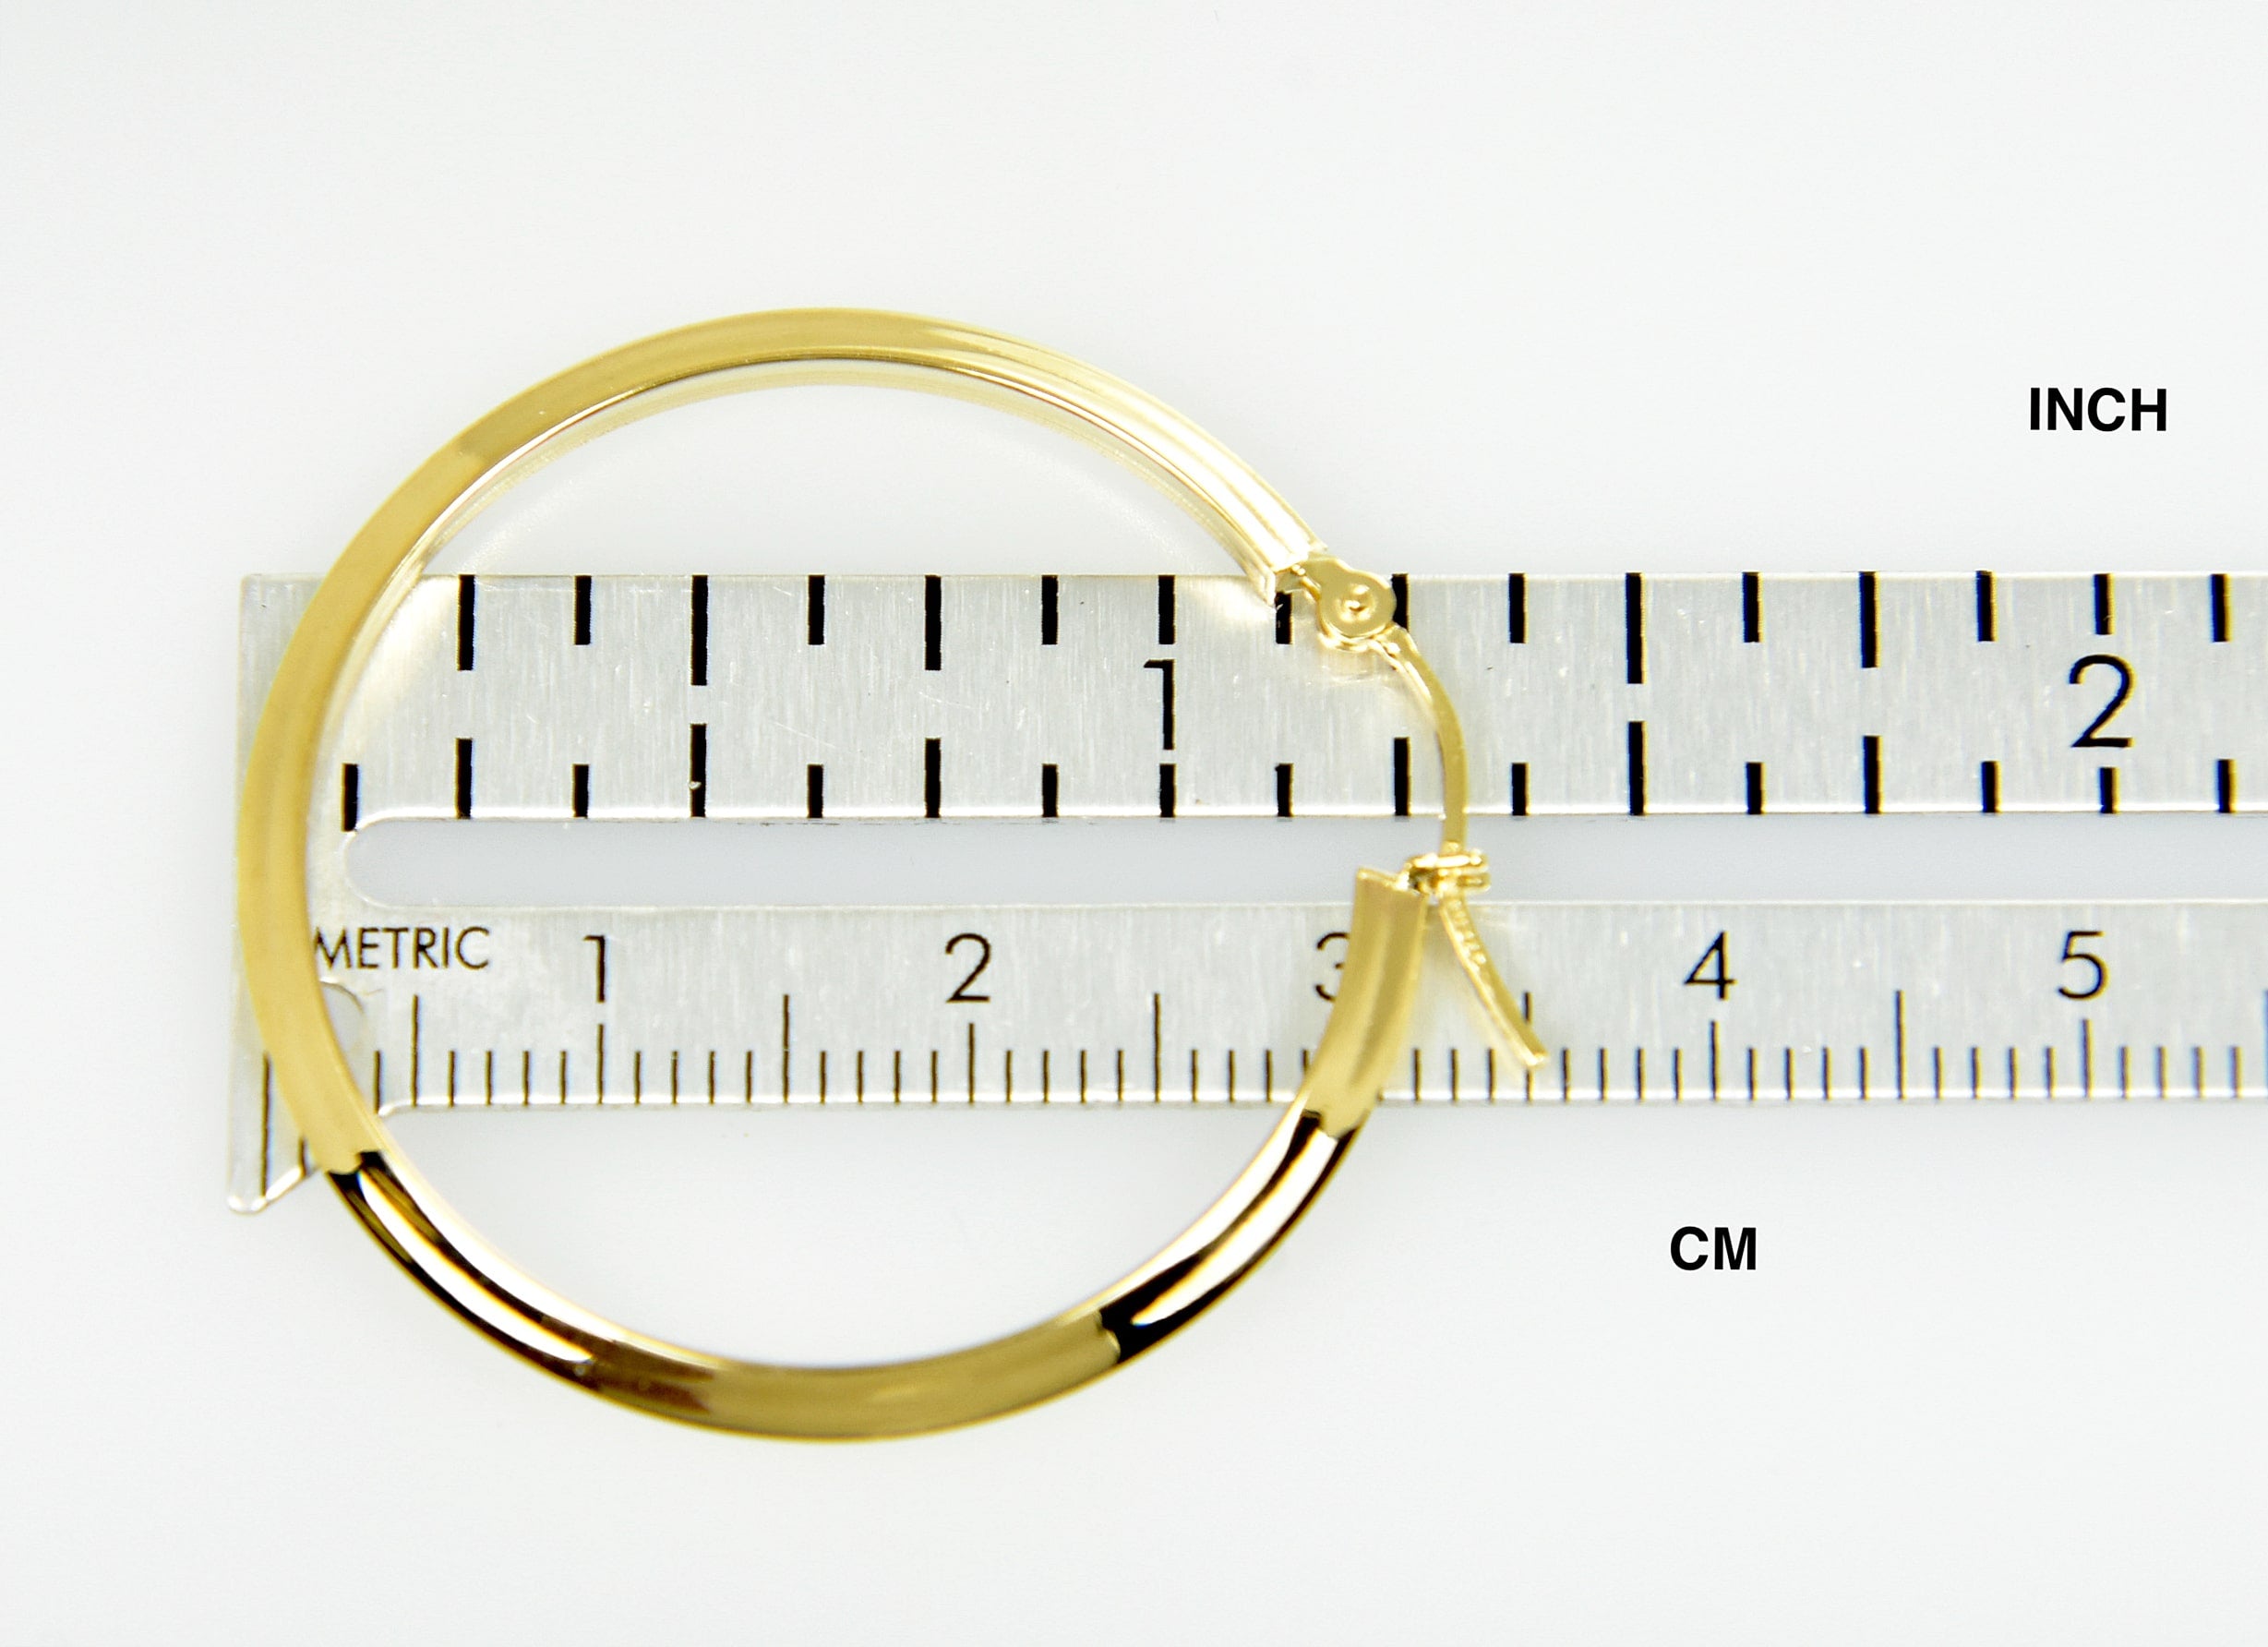 14k Yellow Gold Round Knife Edge Hoop Earrings 30mm x 2.25mm